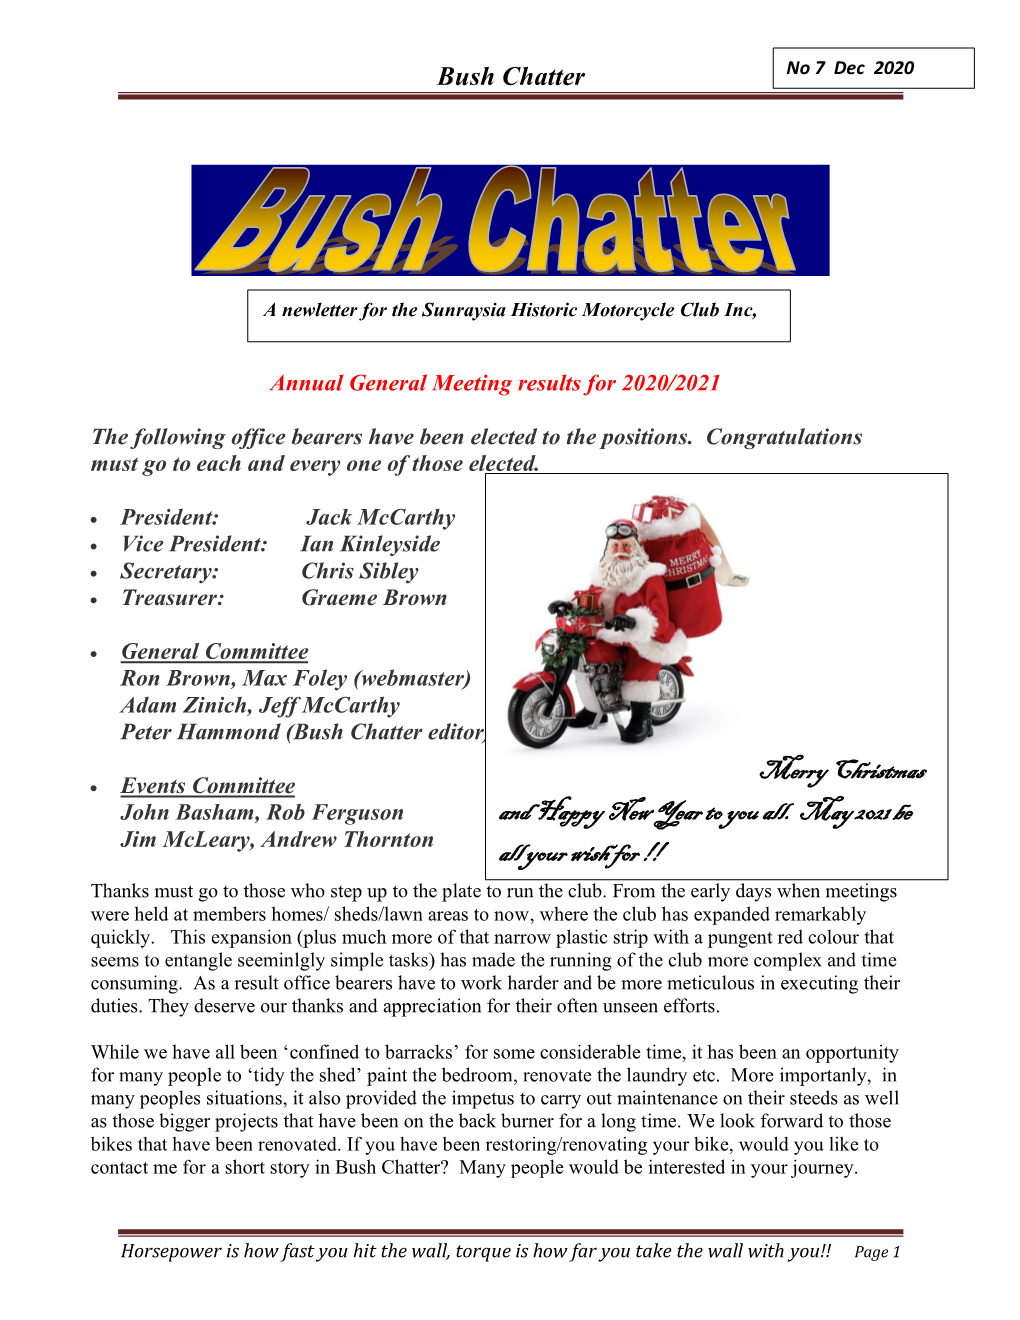 Bush Chatter No 7 Dec 2020